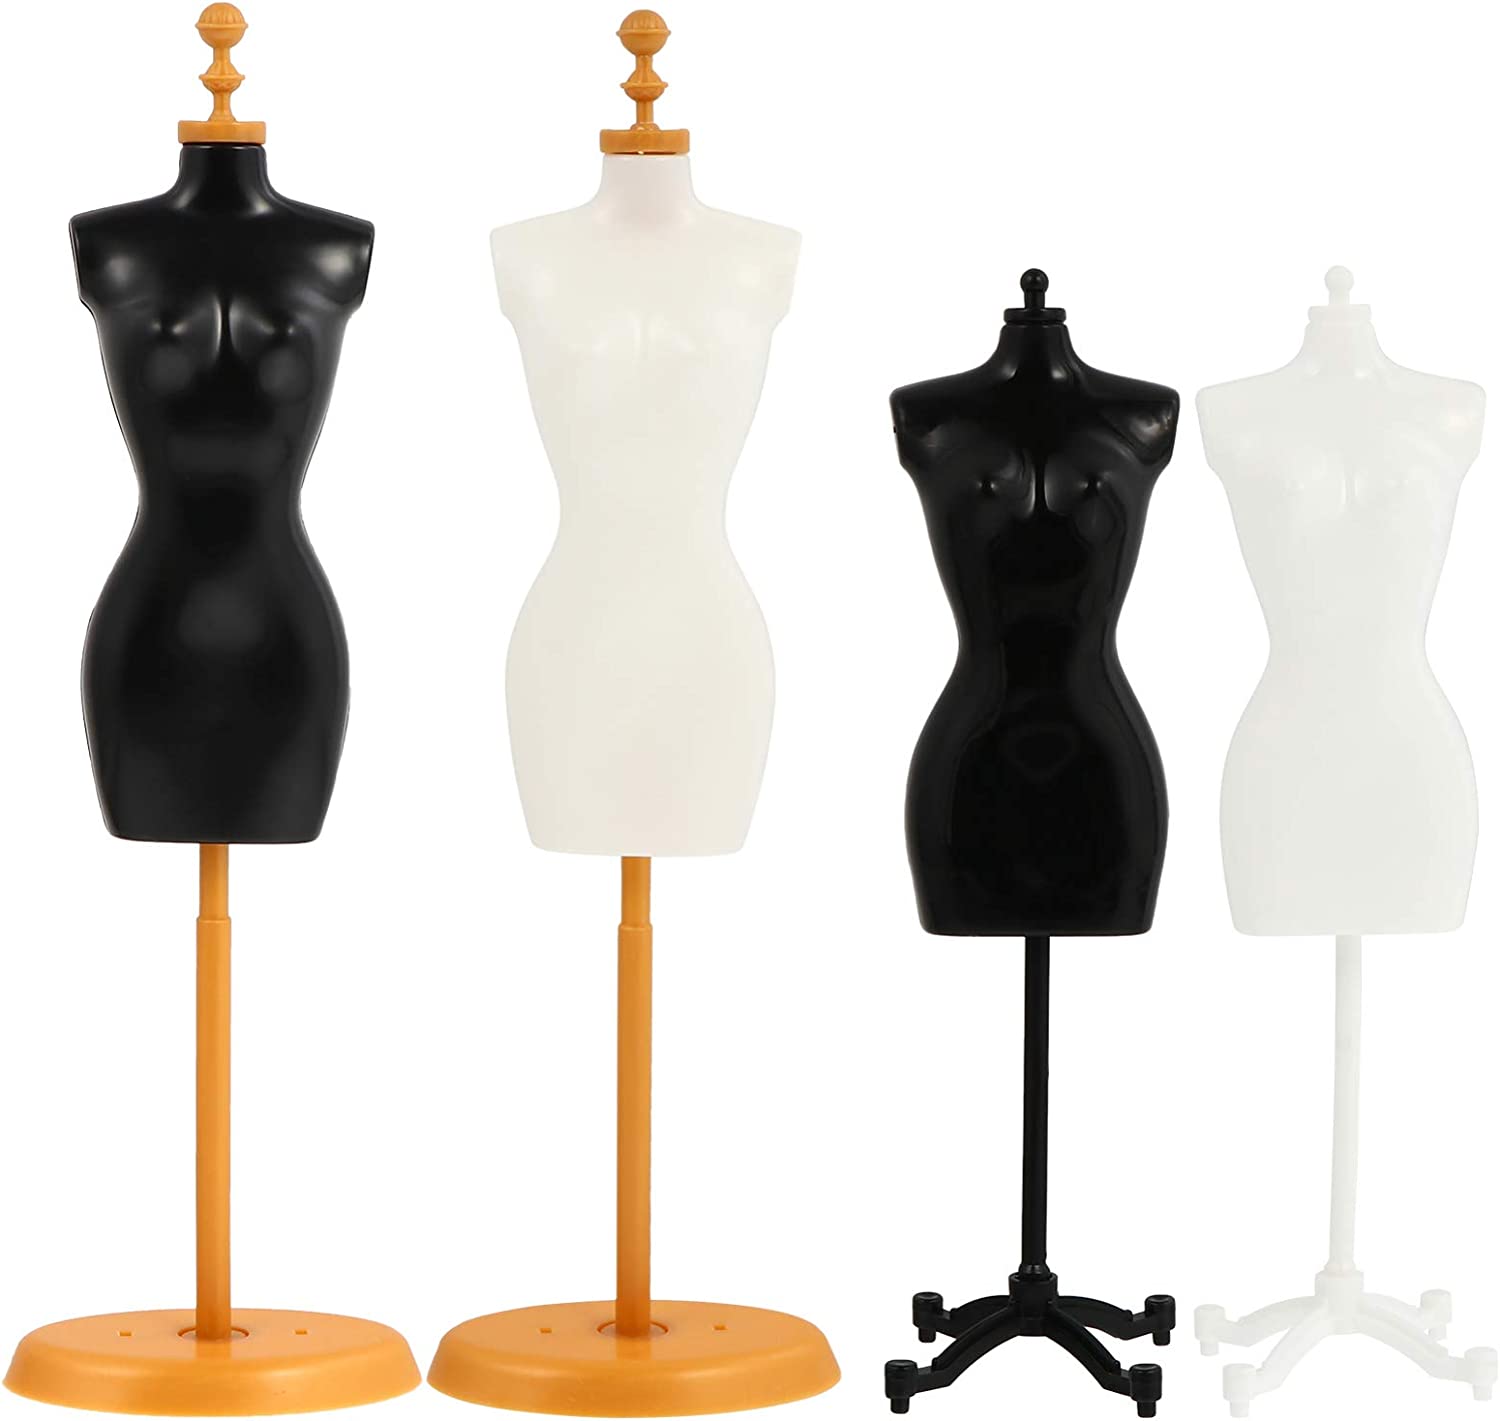 HOMBOUR Mannequin Torso Dress Form, Adjustable 52-67 inch Manikin, Female Mannequin Body with Wooden Tripod Base Stand for Sewing Dressmaker Display